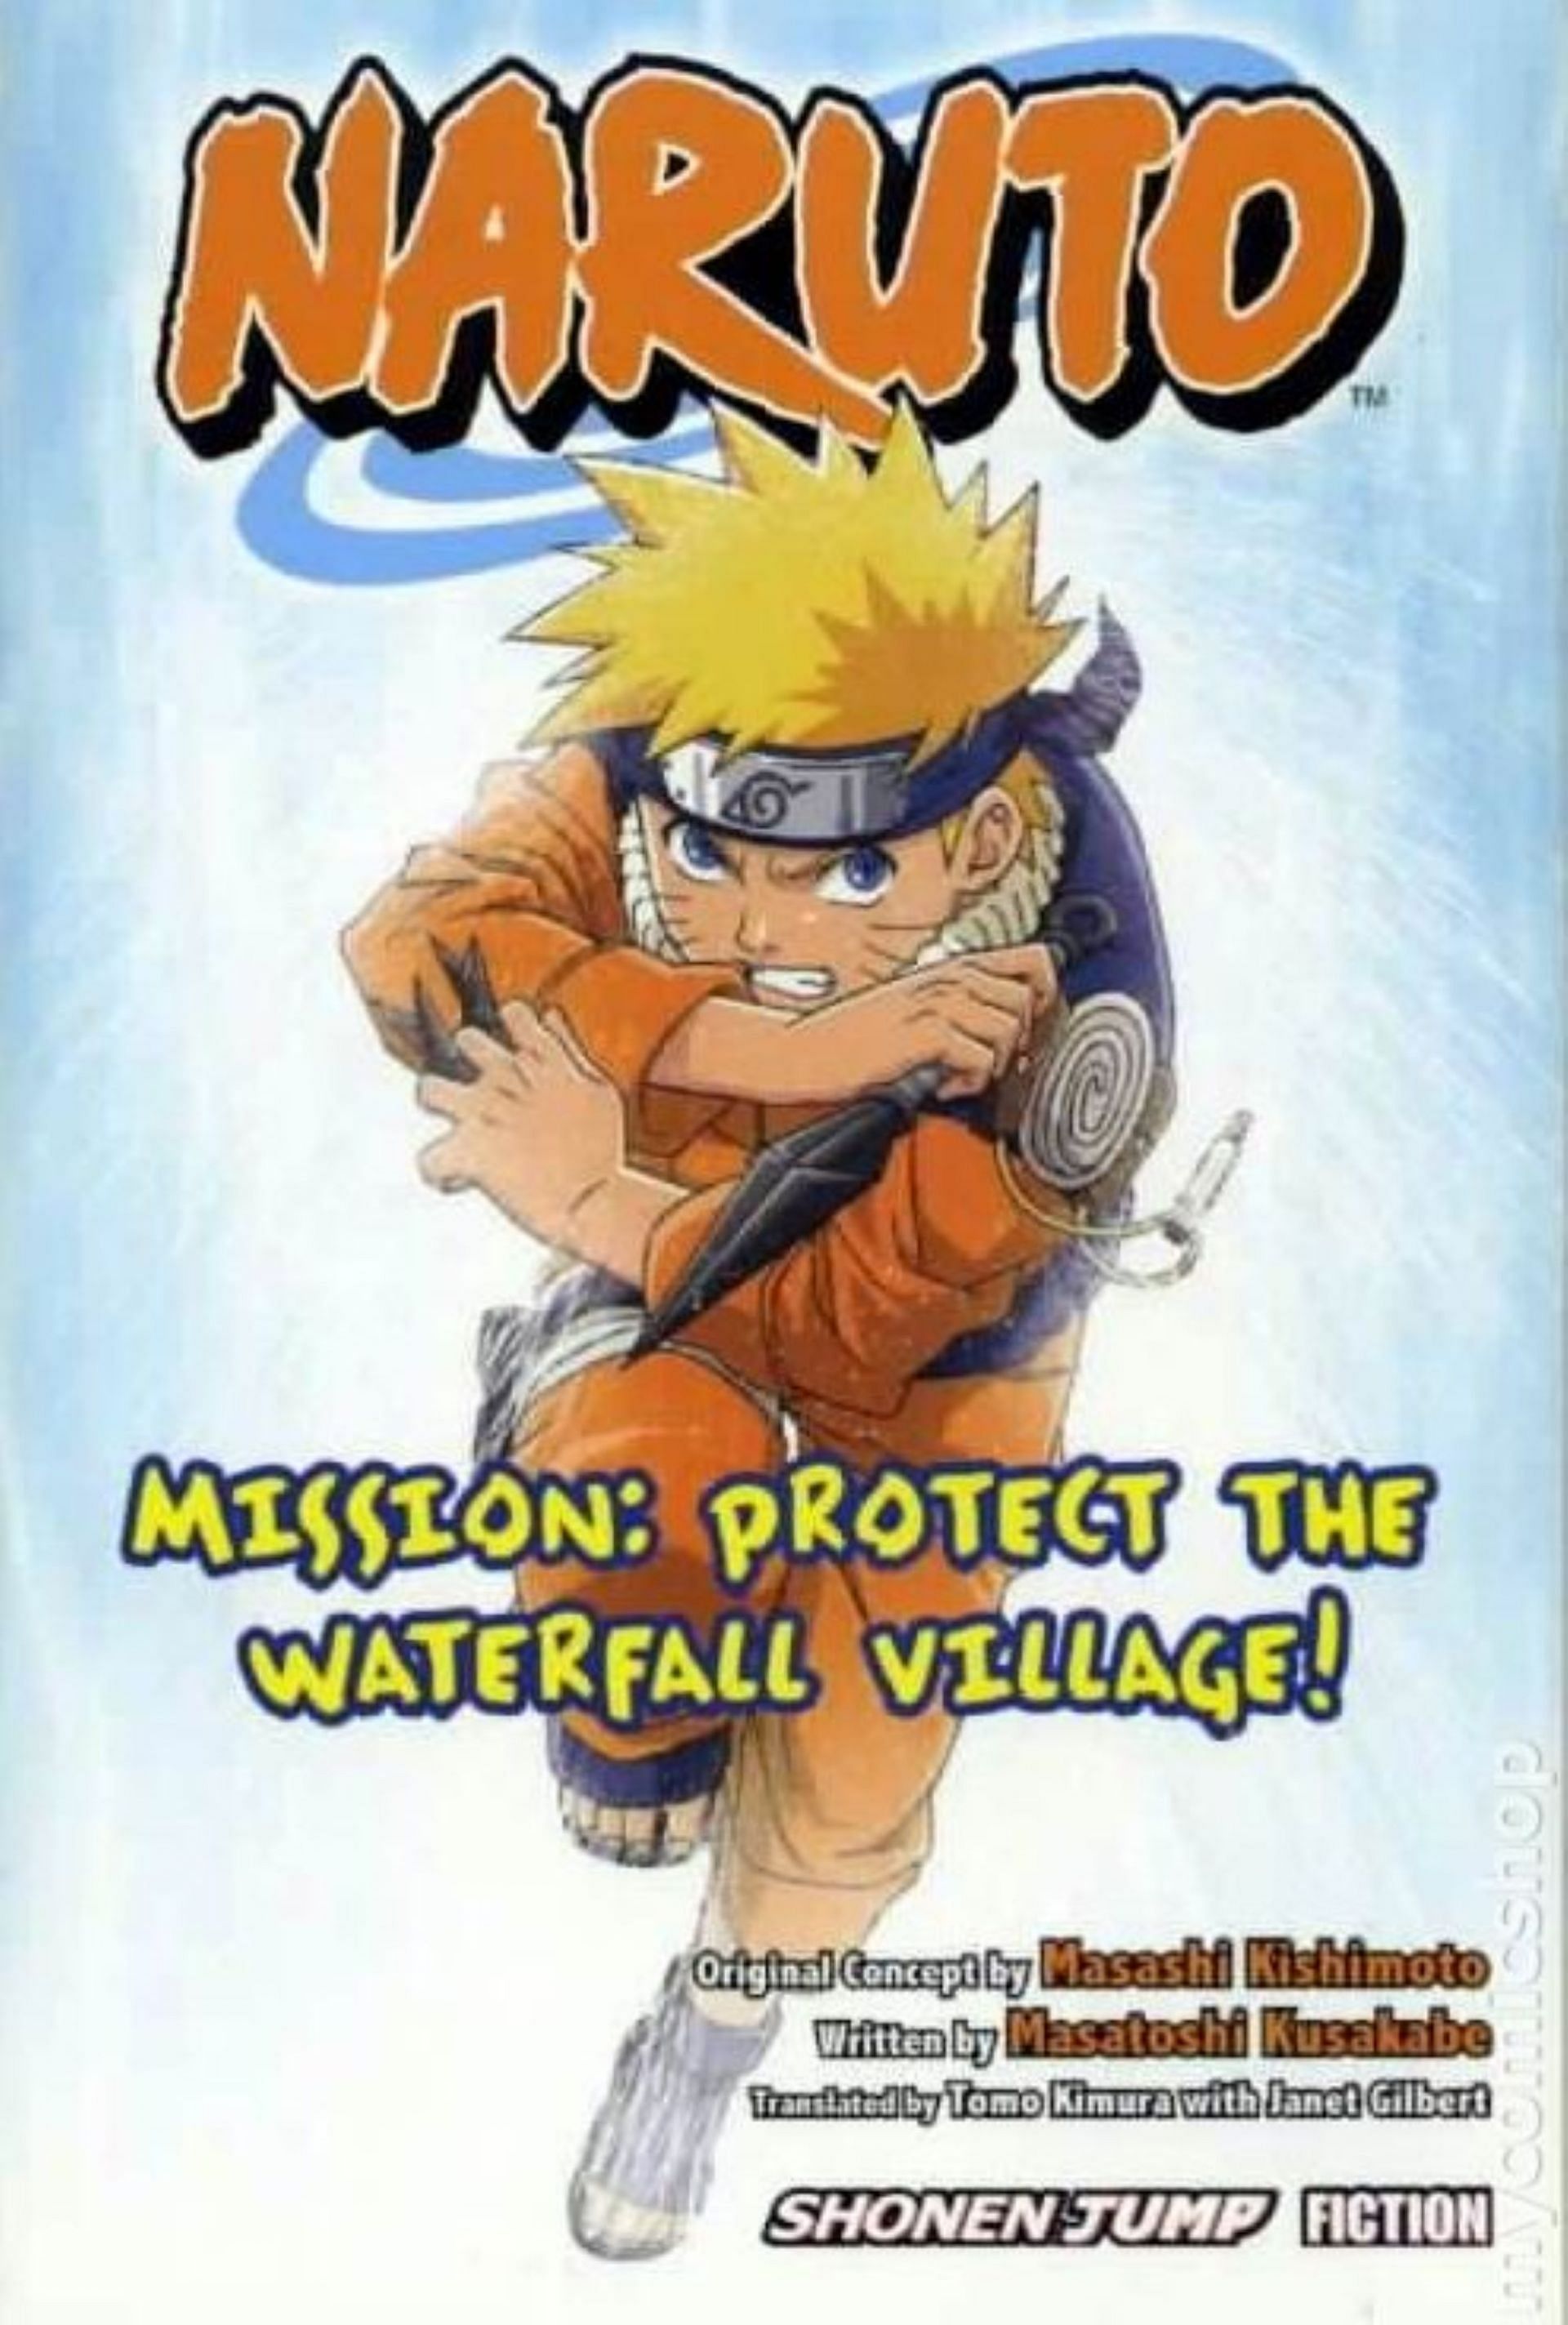 The OVA Naruto light novel cover (Image via Masashi Kishimoto/Shueisha)